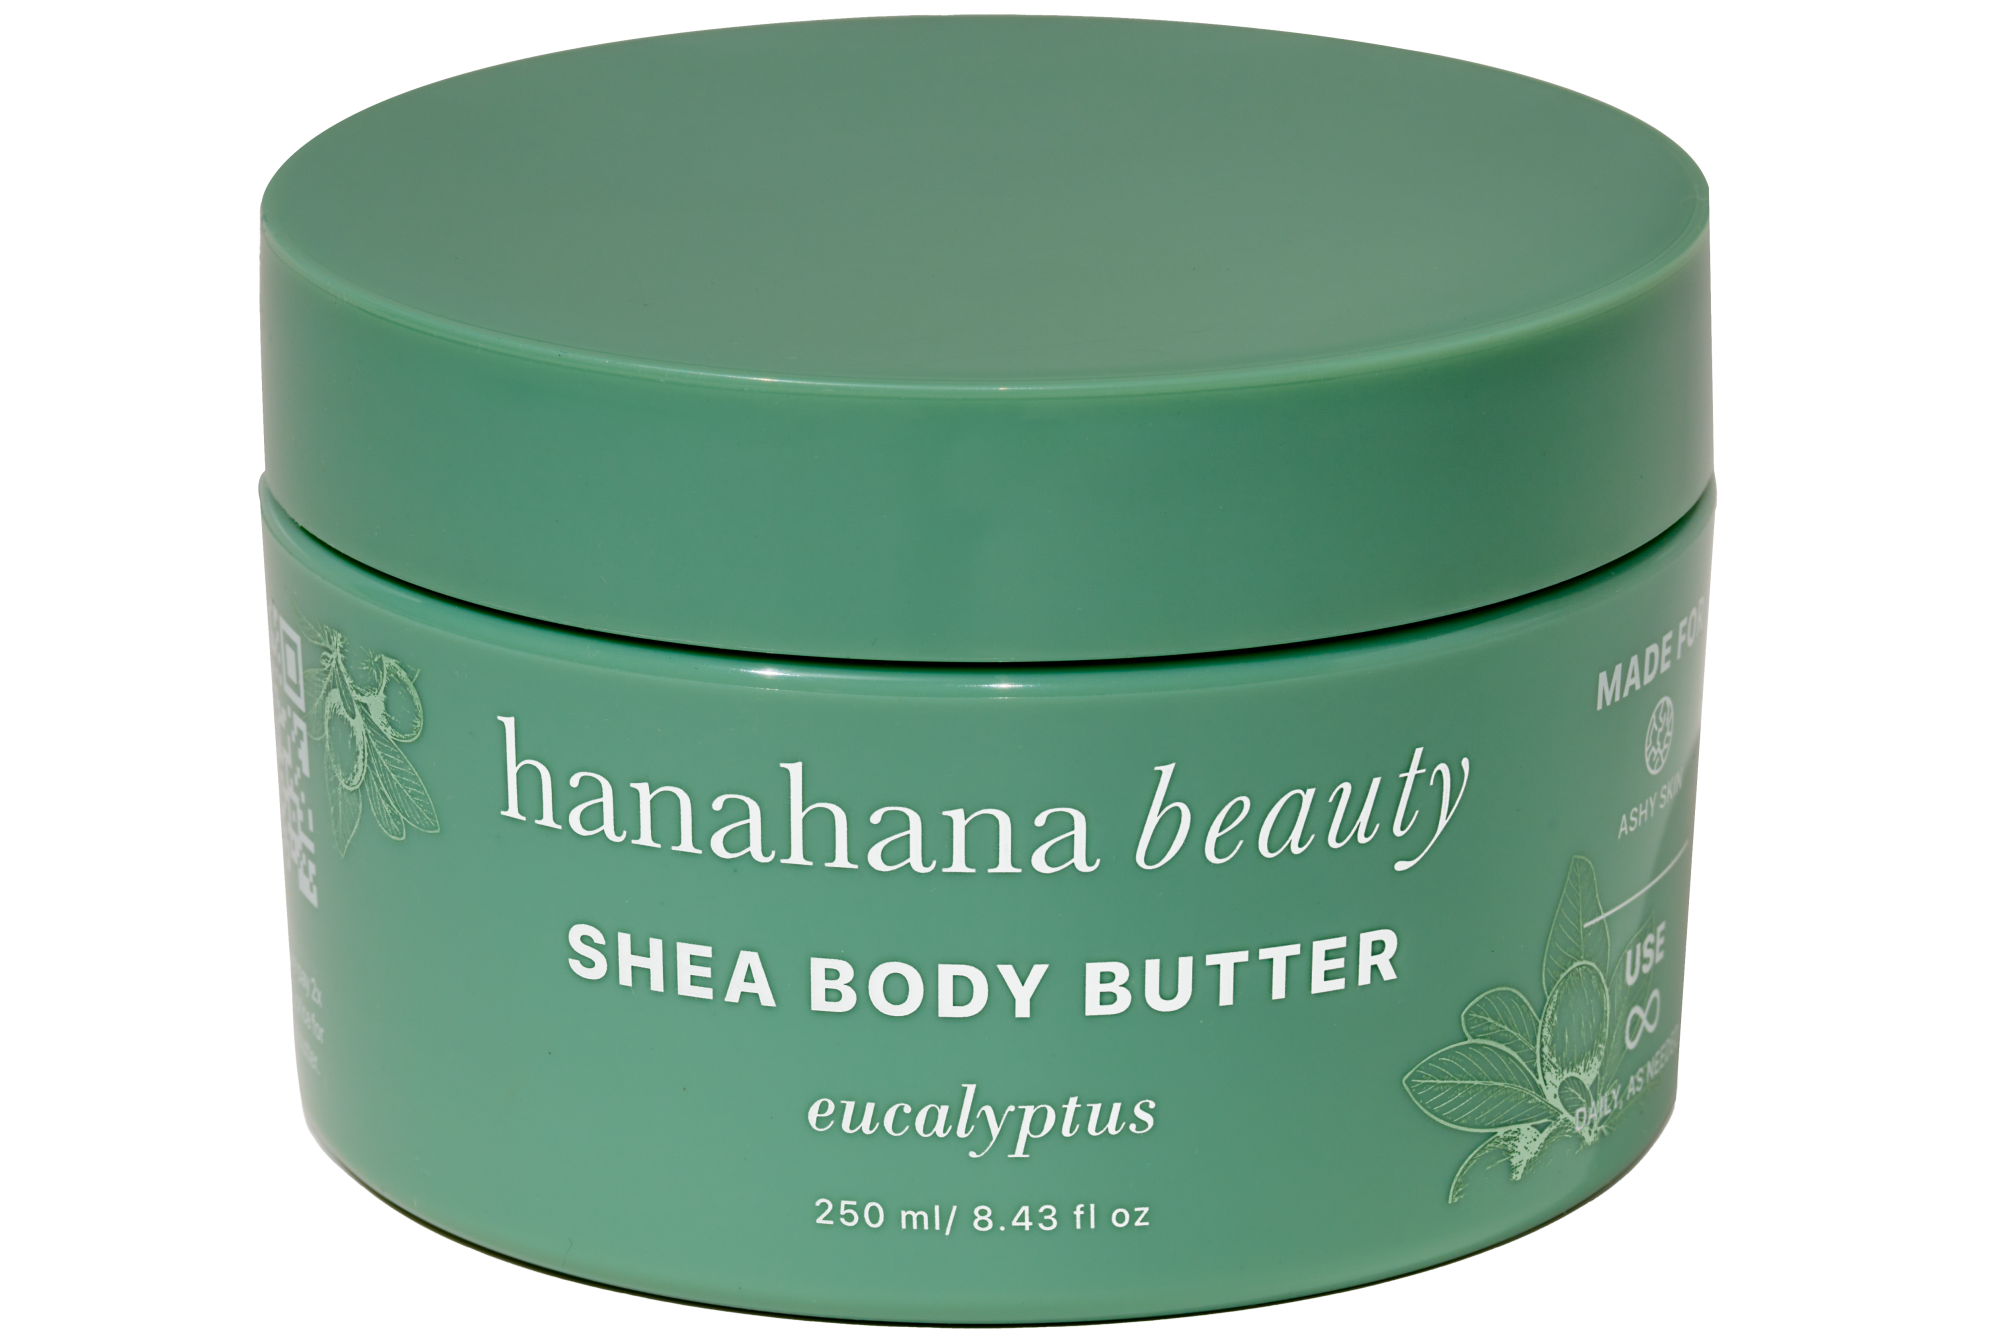 A green jar of Hanahana Beauty shea butter